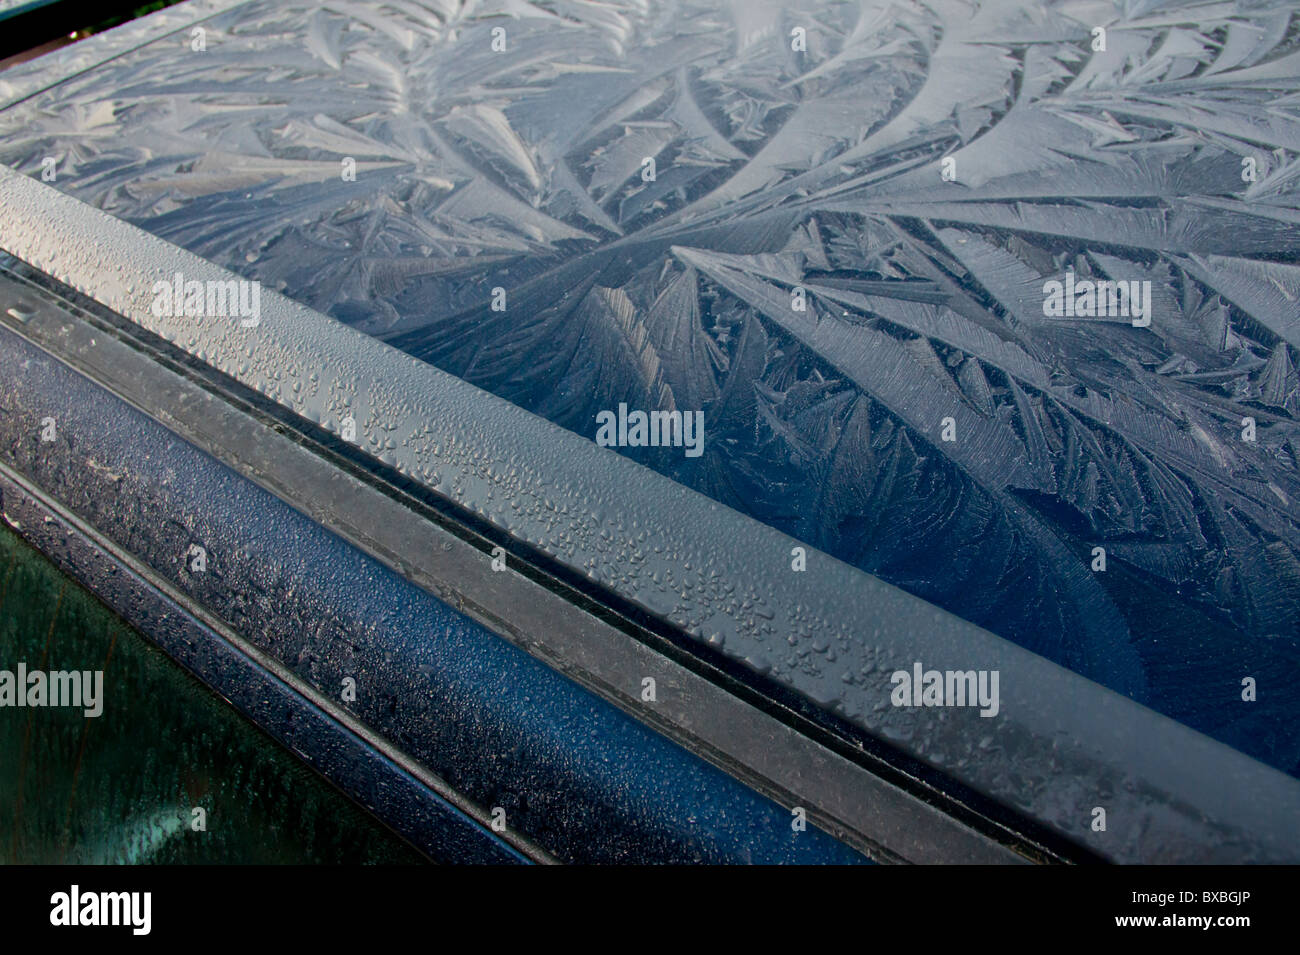 UK, England, ice on roof of car Stock Photo